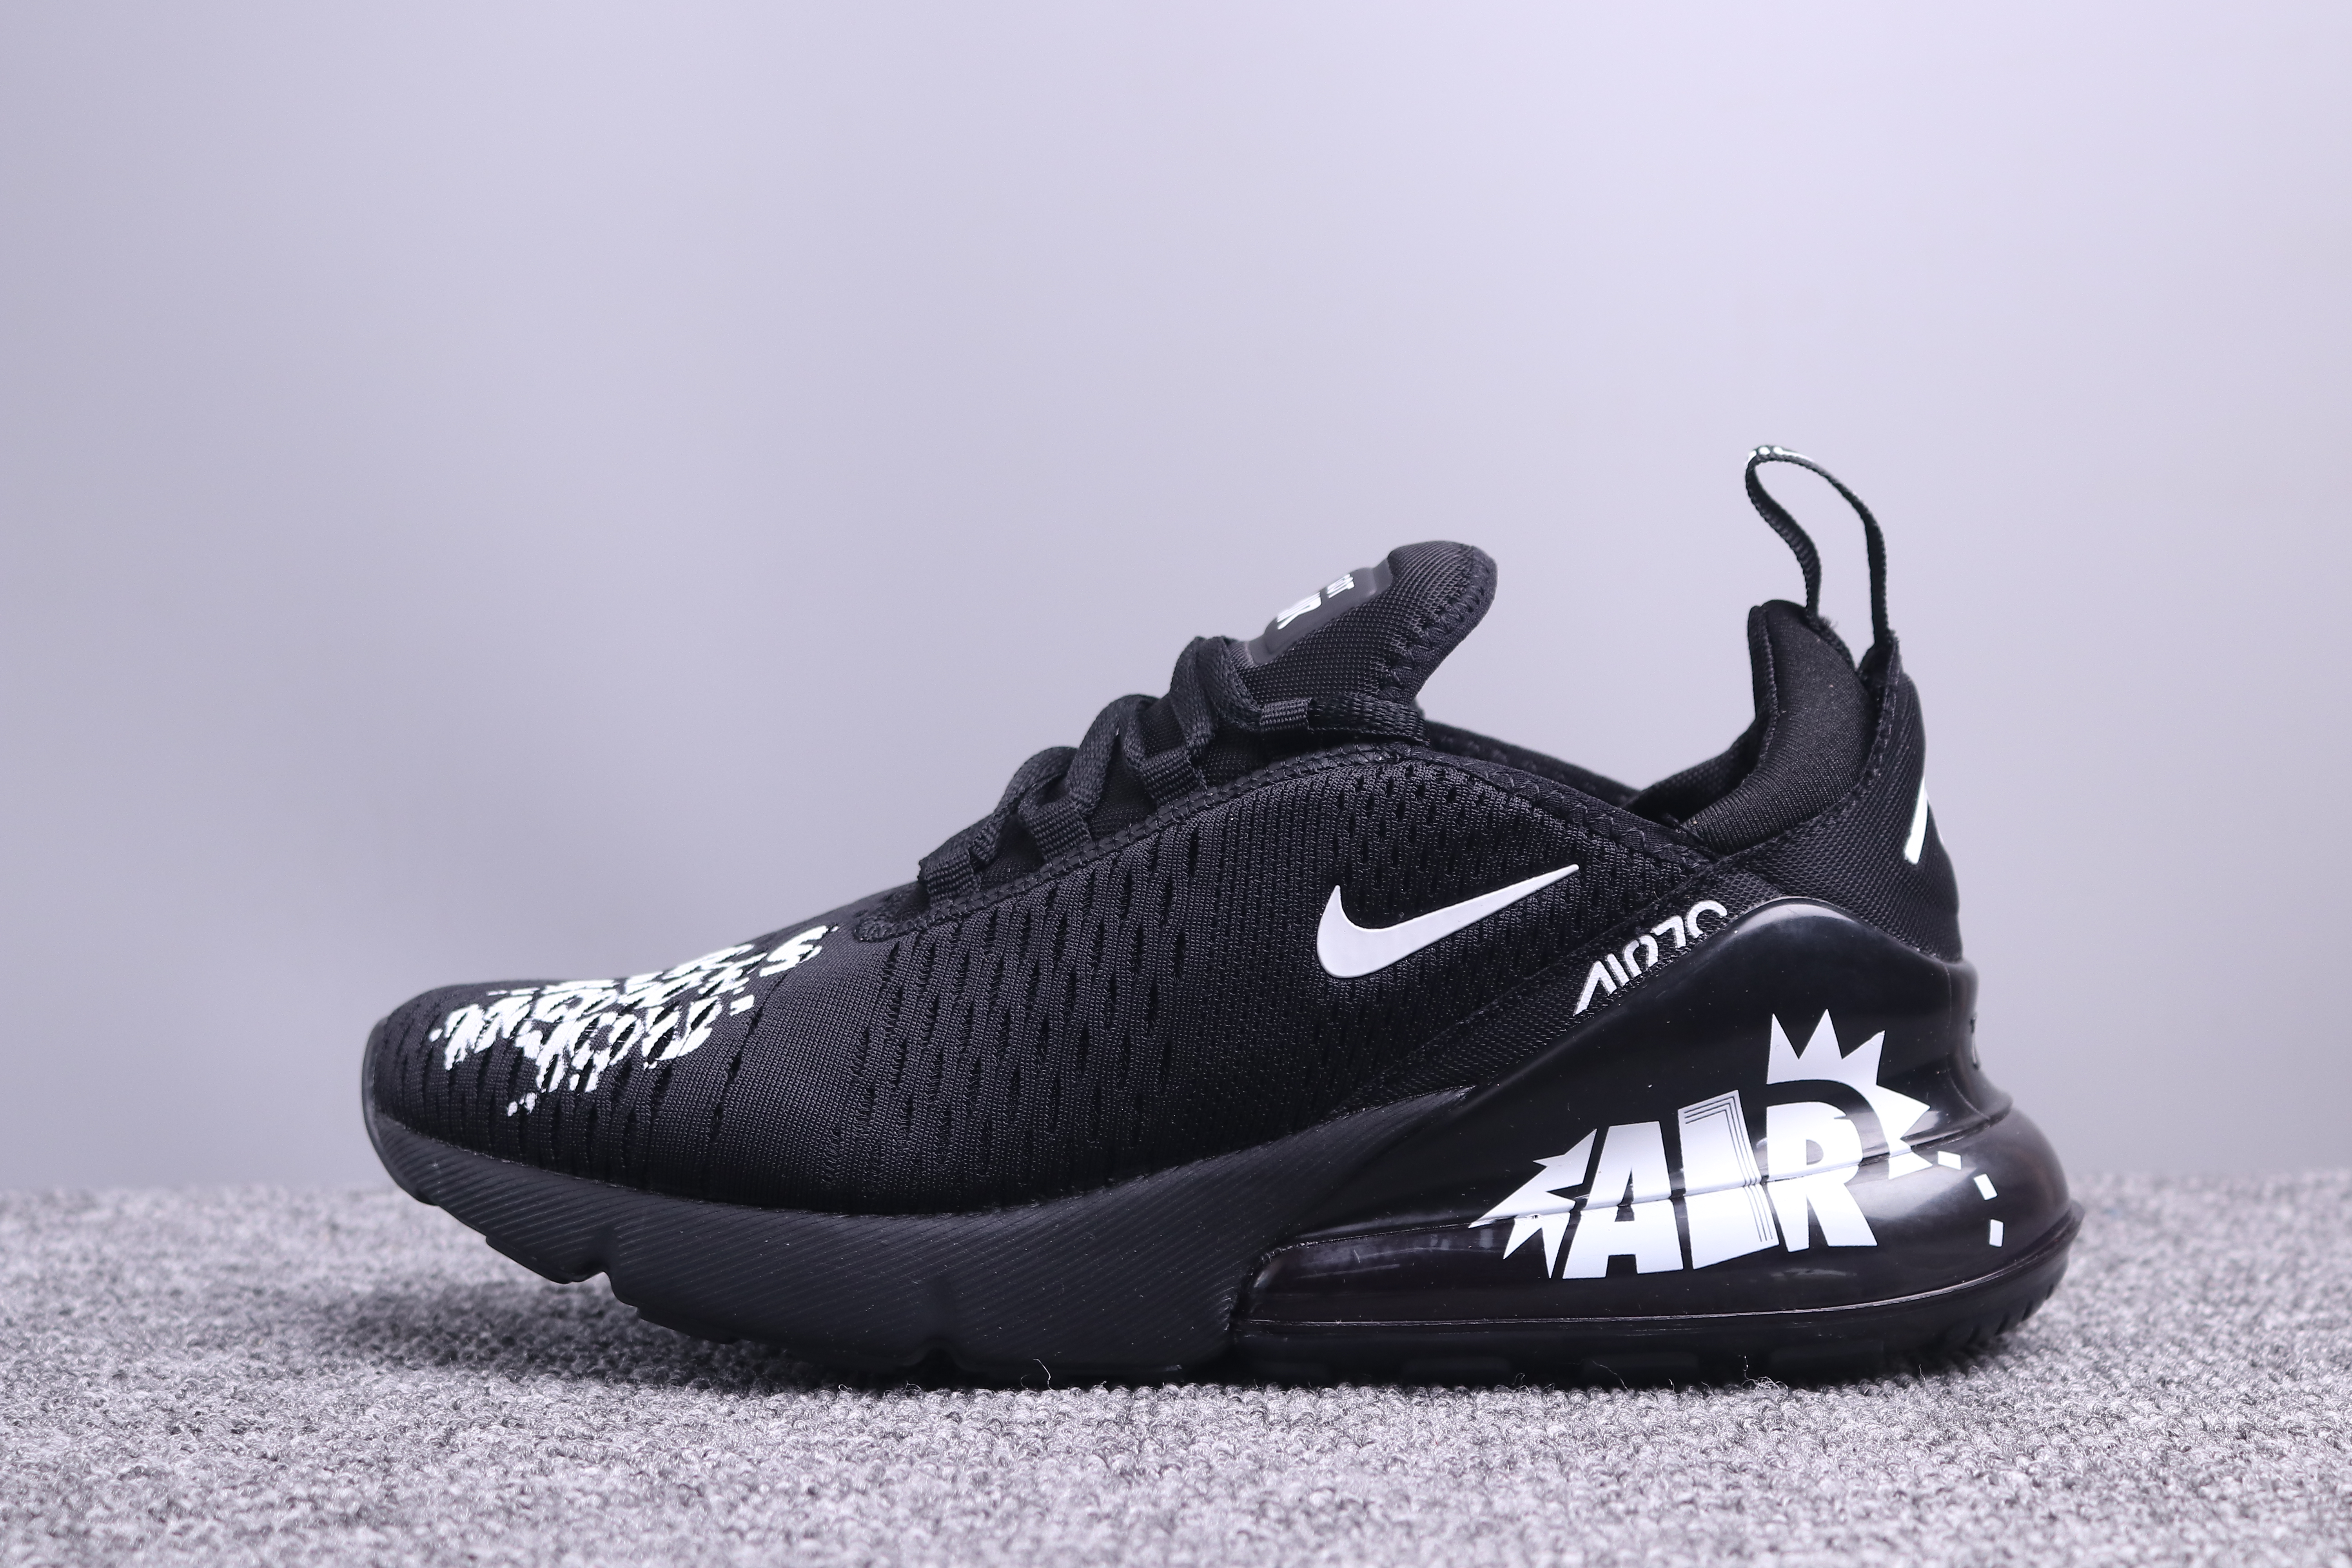 Nike Air Max 270 Graffiti Black White Shoes - Click Image to Close